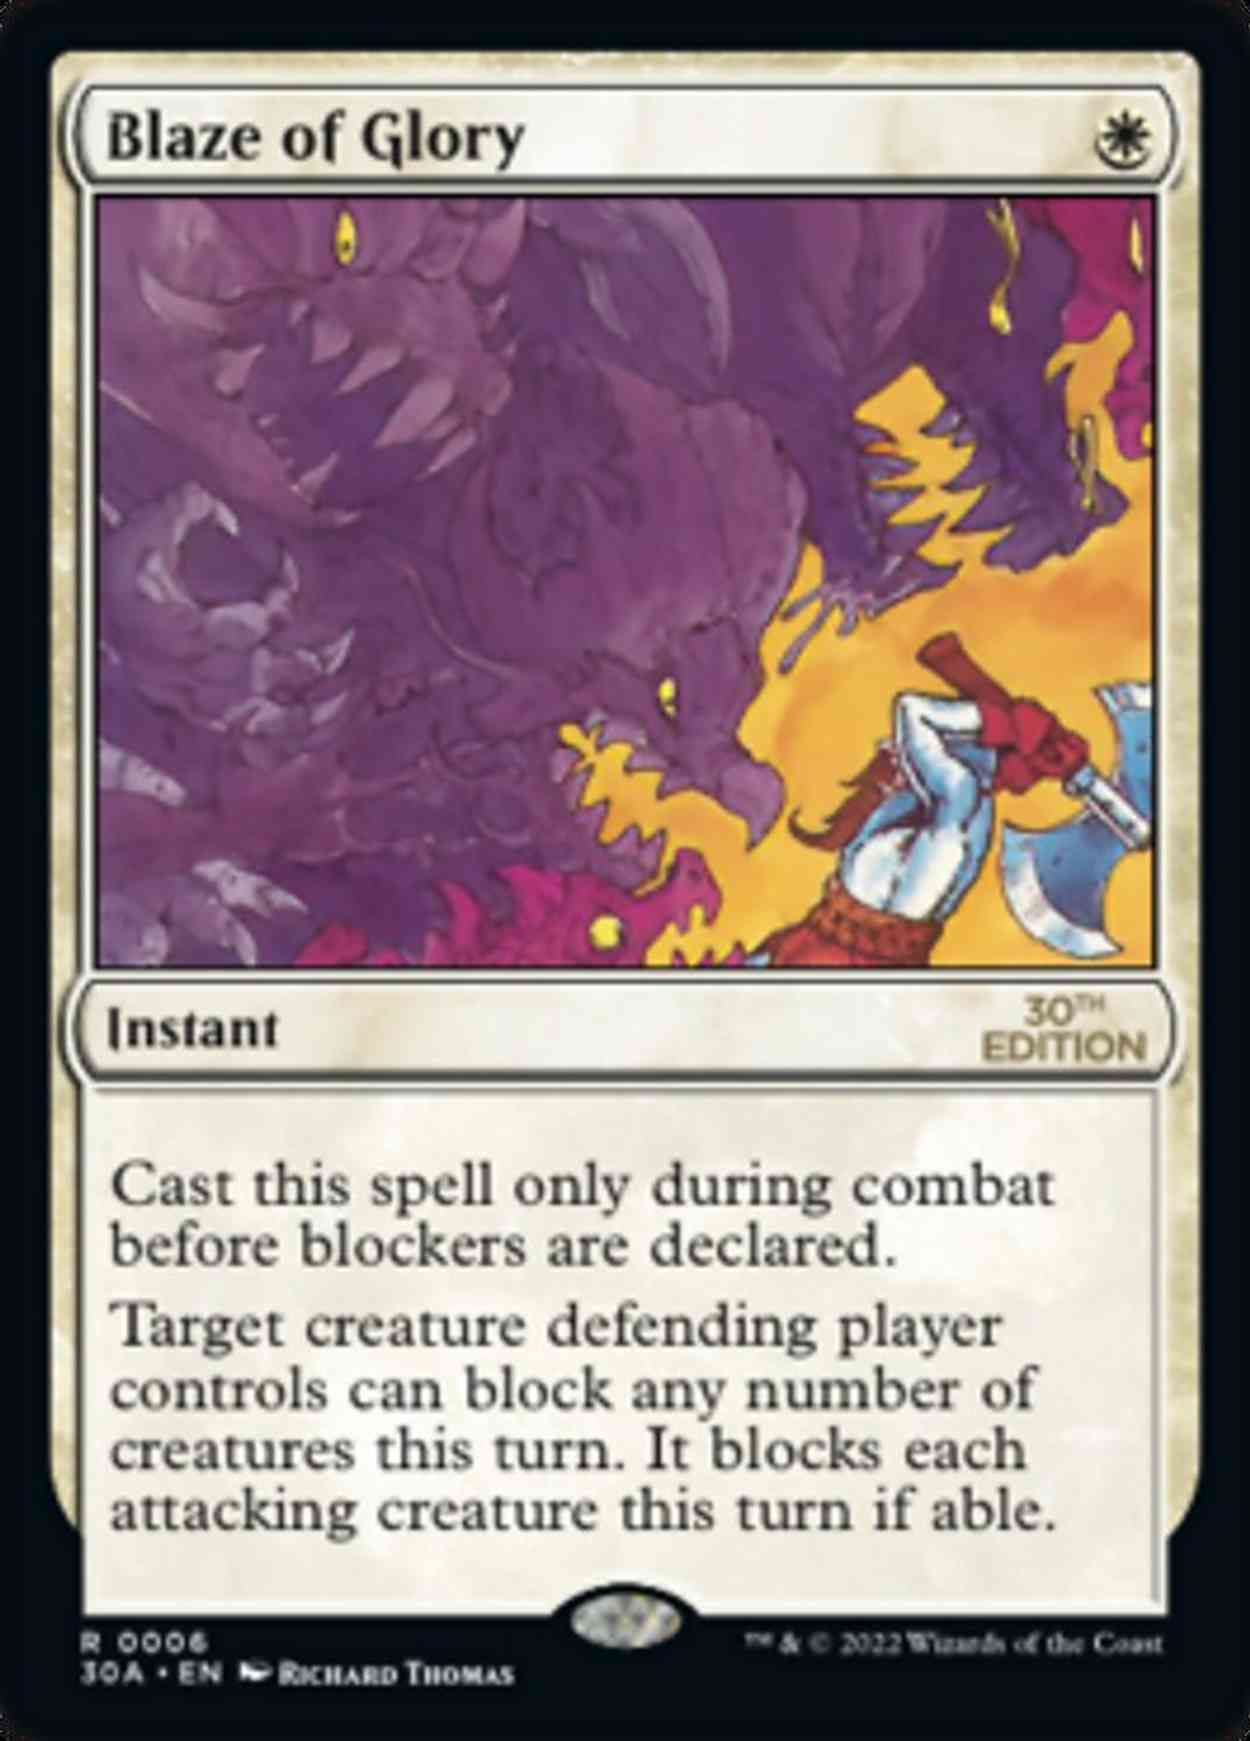 Blaze of Glory magic card front